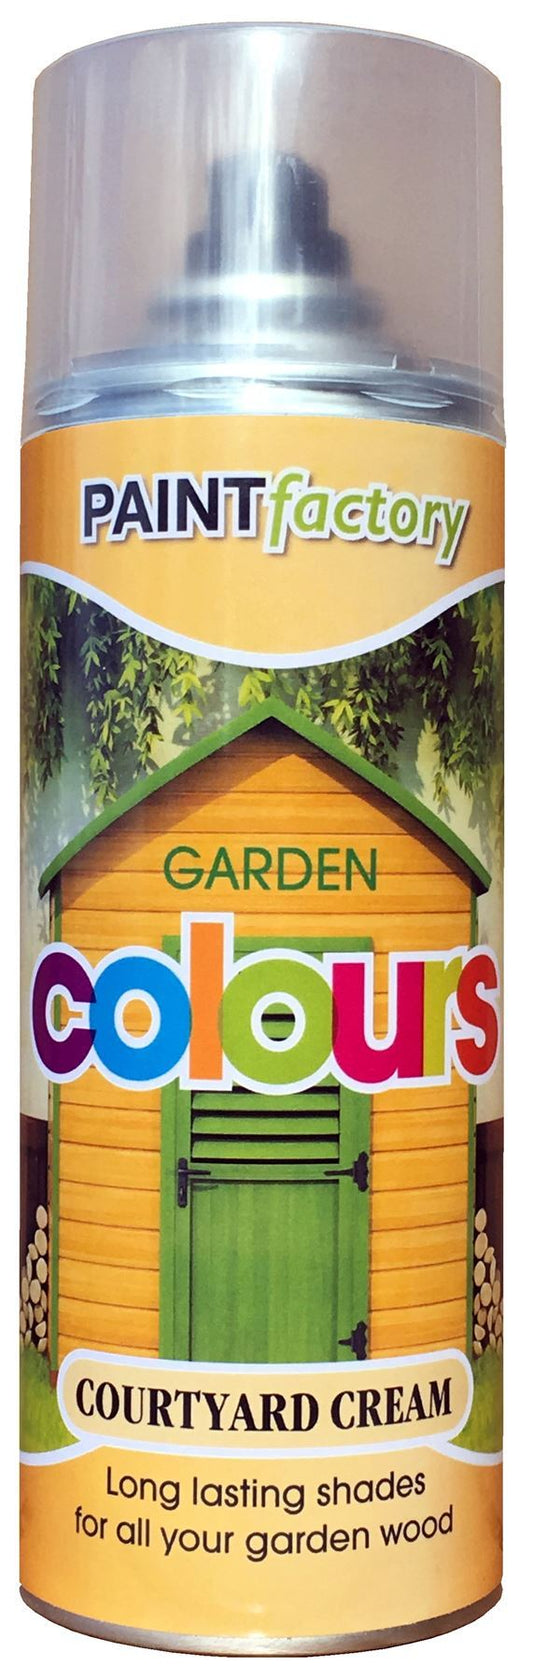 Paint Factory - Garden Colours Courtyard Cream 400ml Spray Paints | Snape & Sons